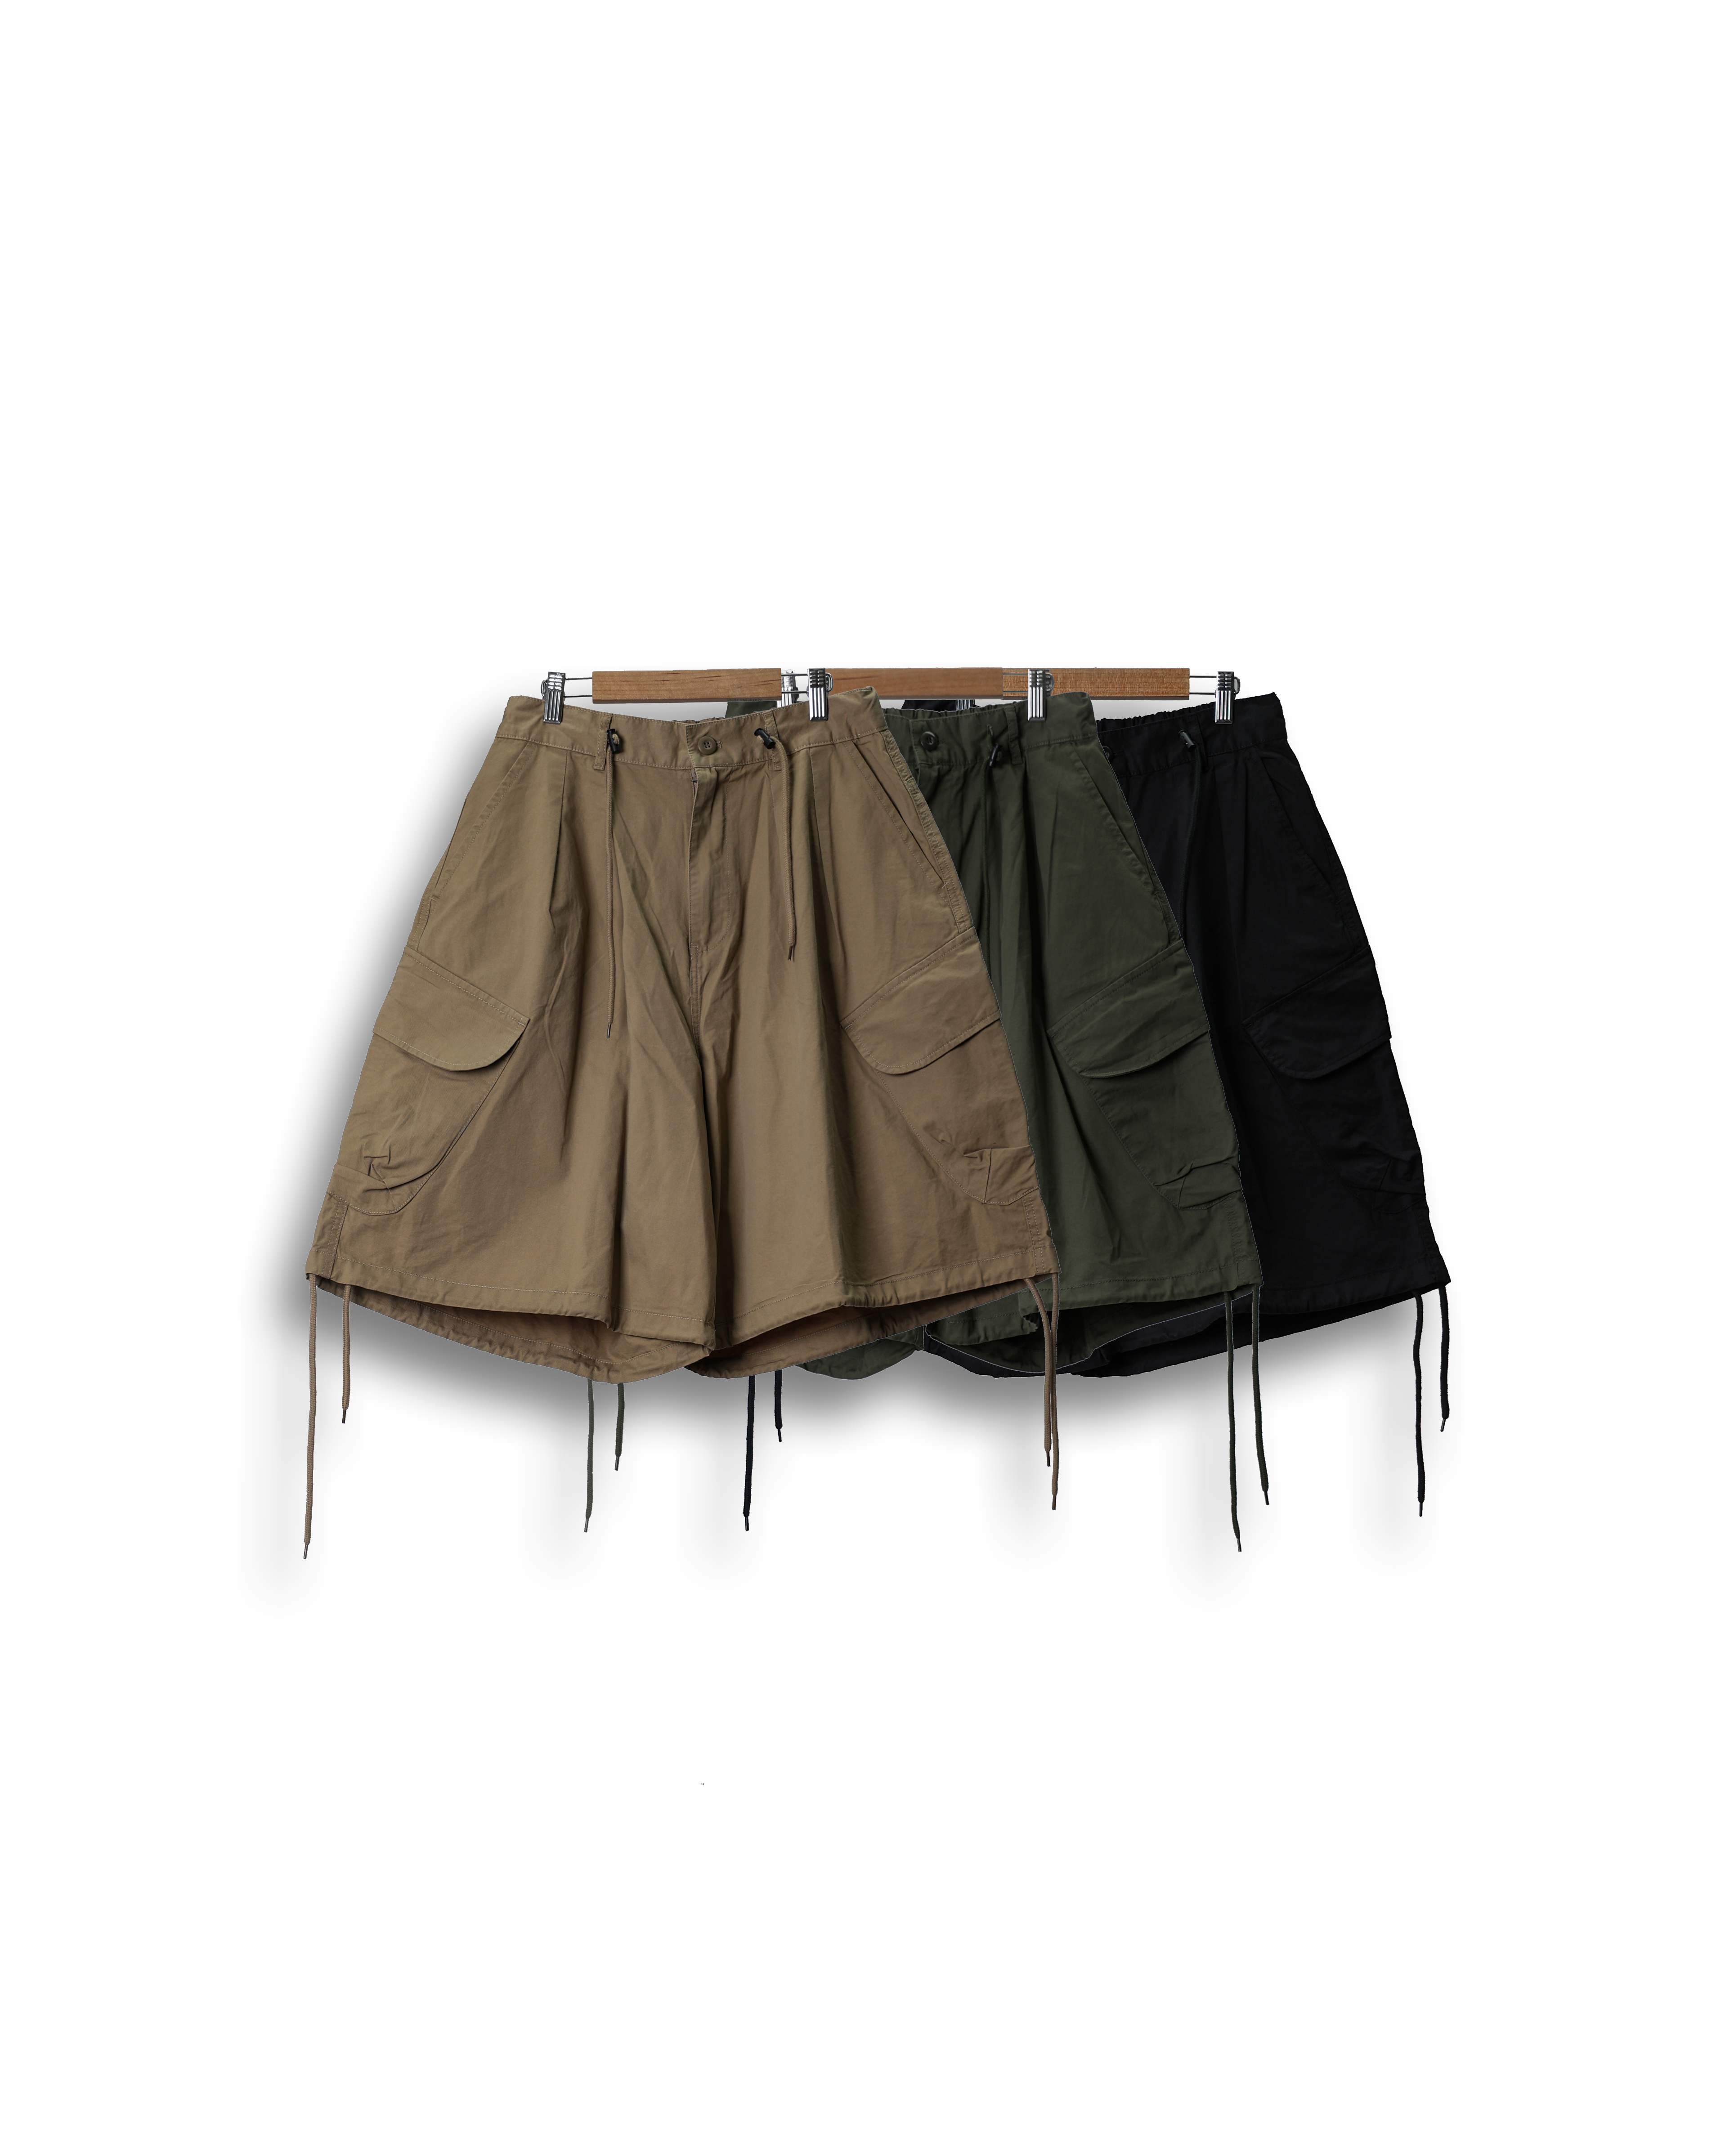 MOII 341 Round Cargo Strap Half Pants (Black/Khaki/Beige) - 3차 리오더 (베이지M 6/9 배송예정)